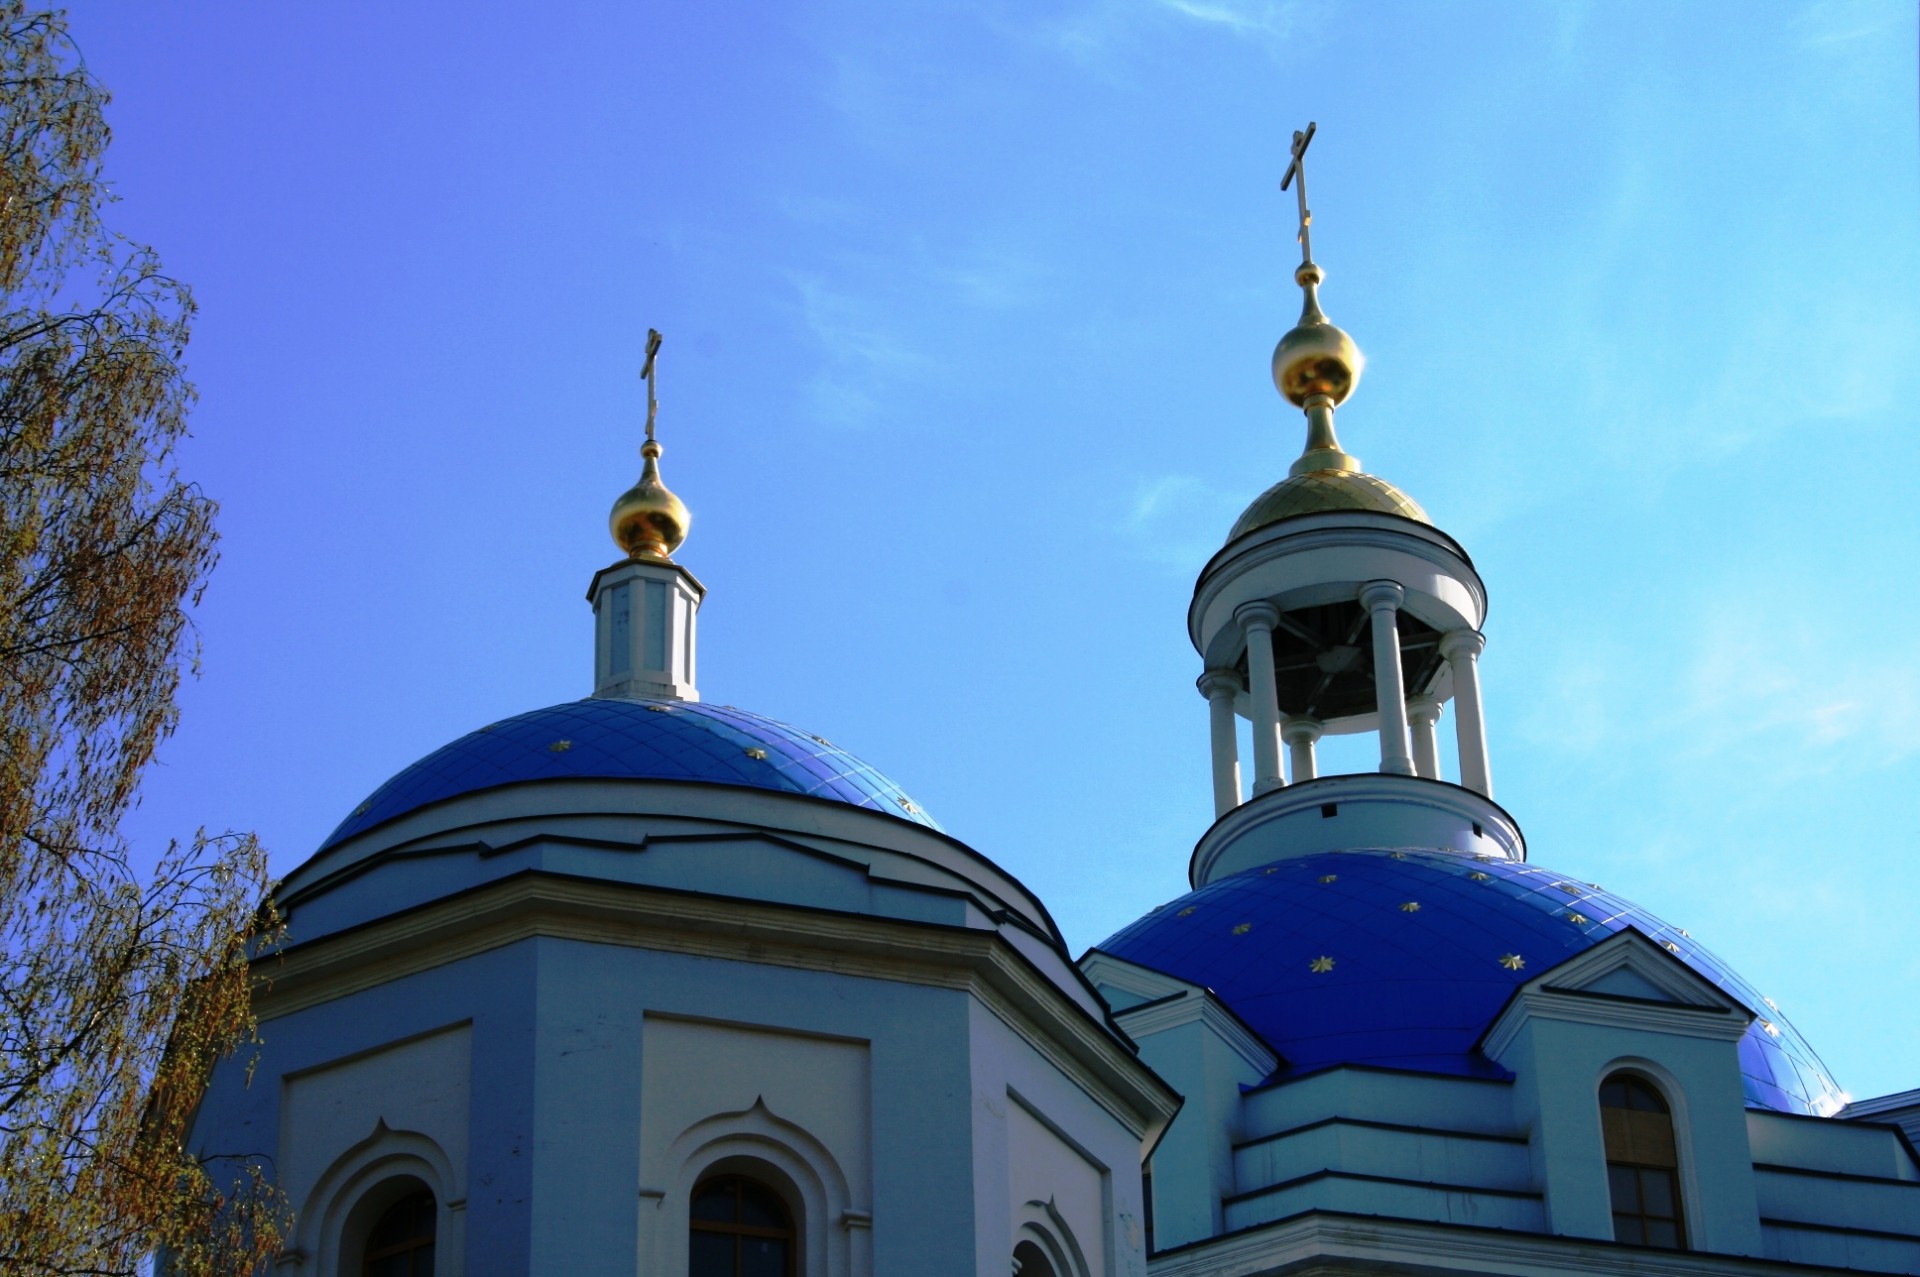 Голубым куполам spasko-vlahensky